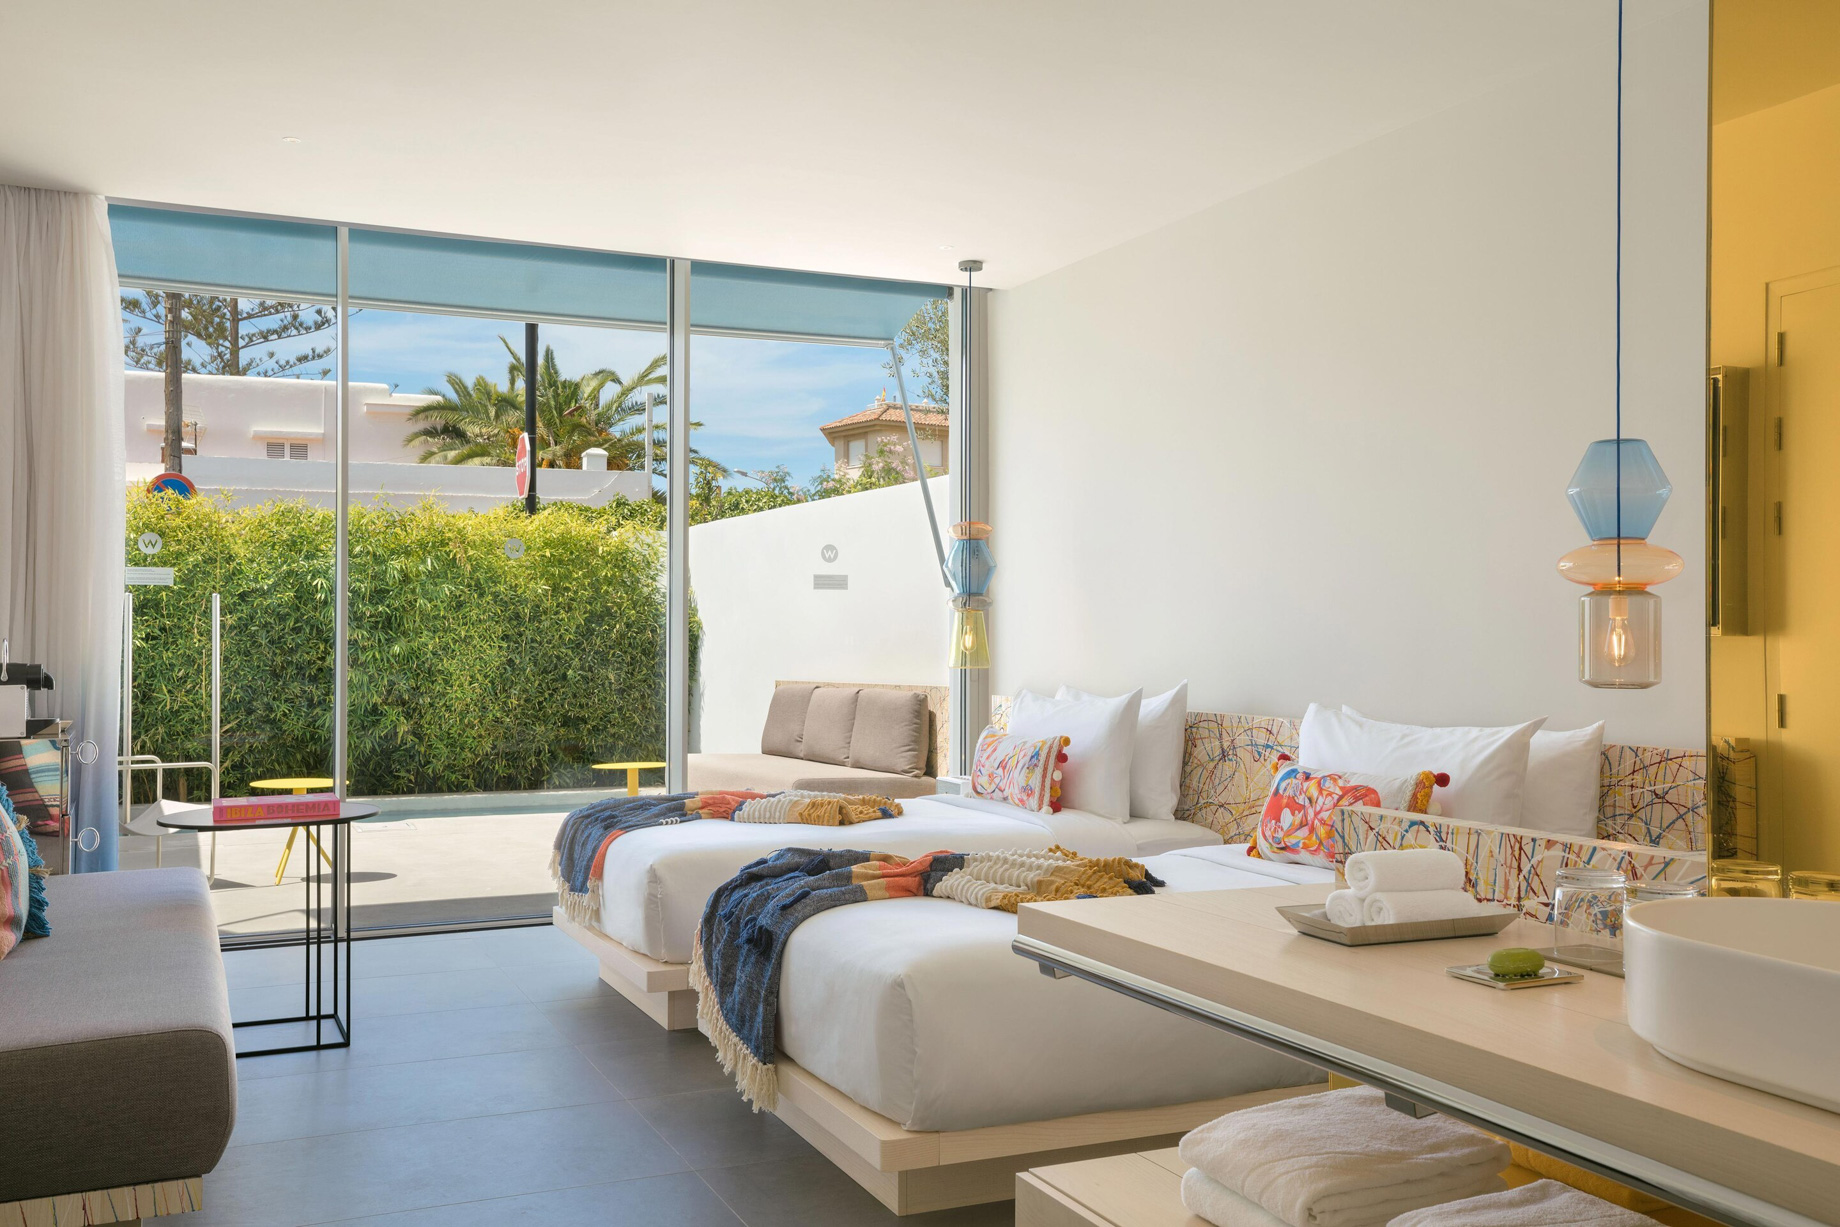 W Ibiza Hotel – Santa Eulalia del Rio, Spain – Spectacular Twin Guest Room